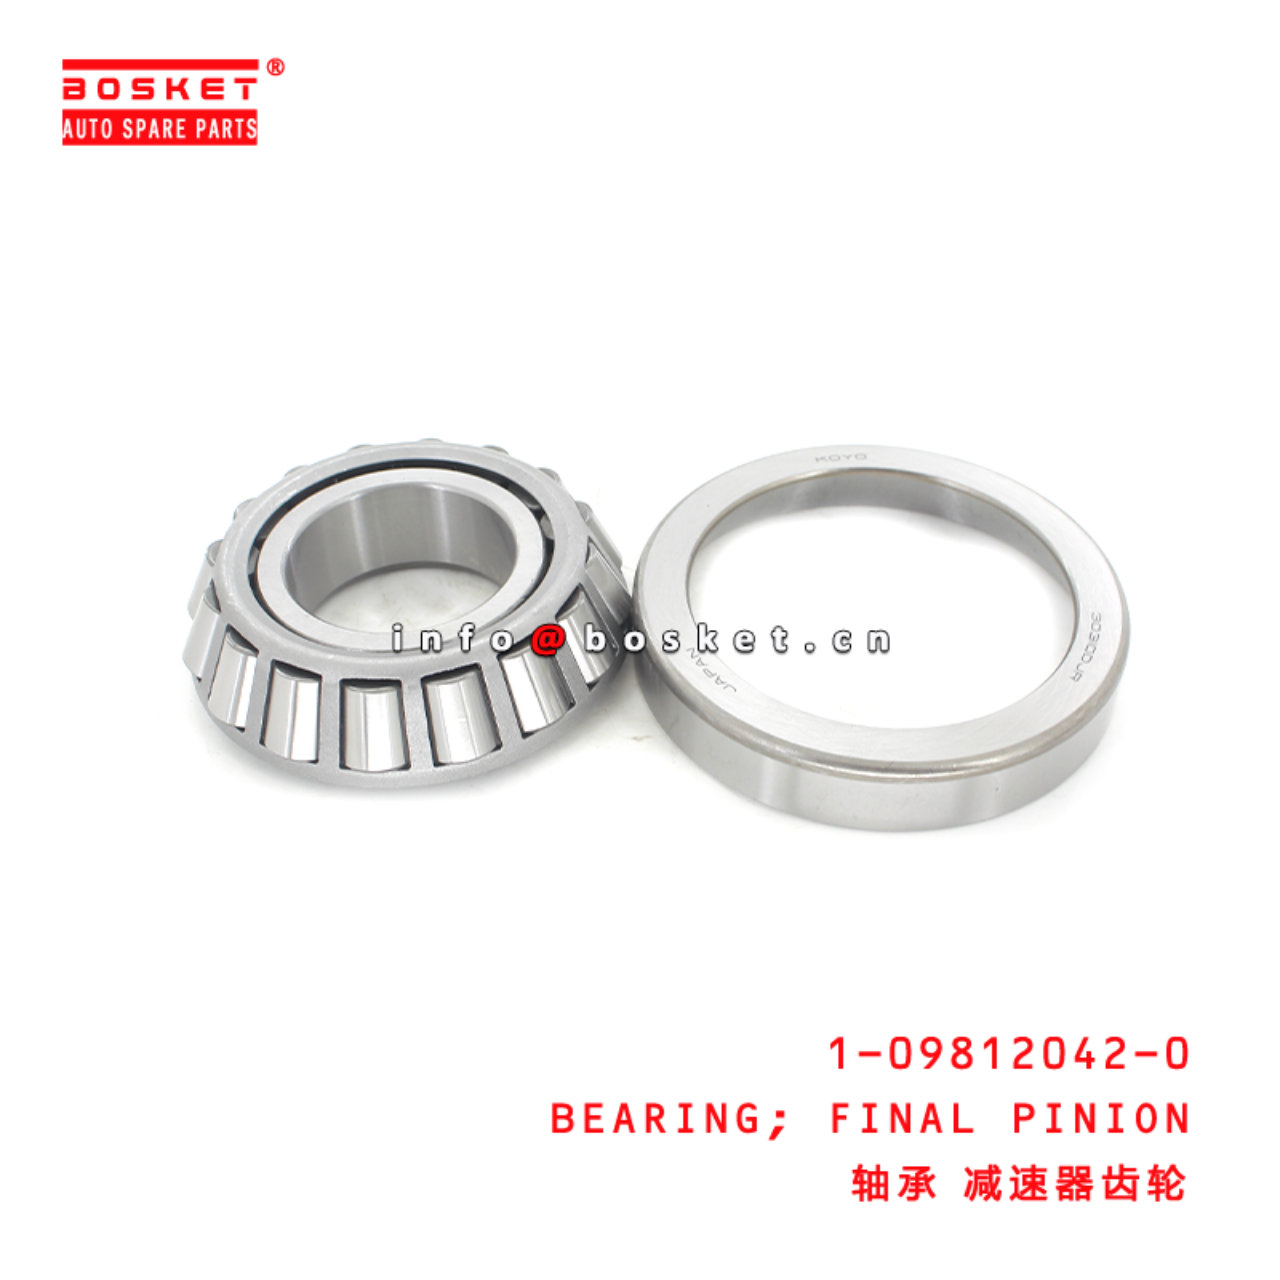 1-09812042-0 Final Pinion Bearing Suitable for ISUZU